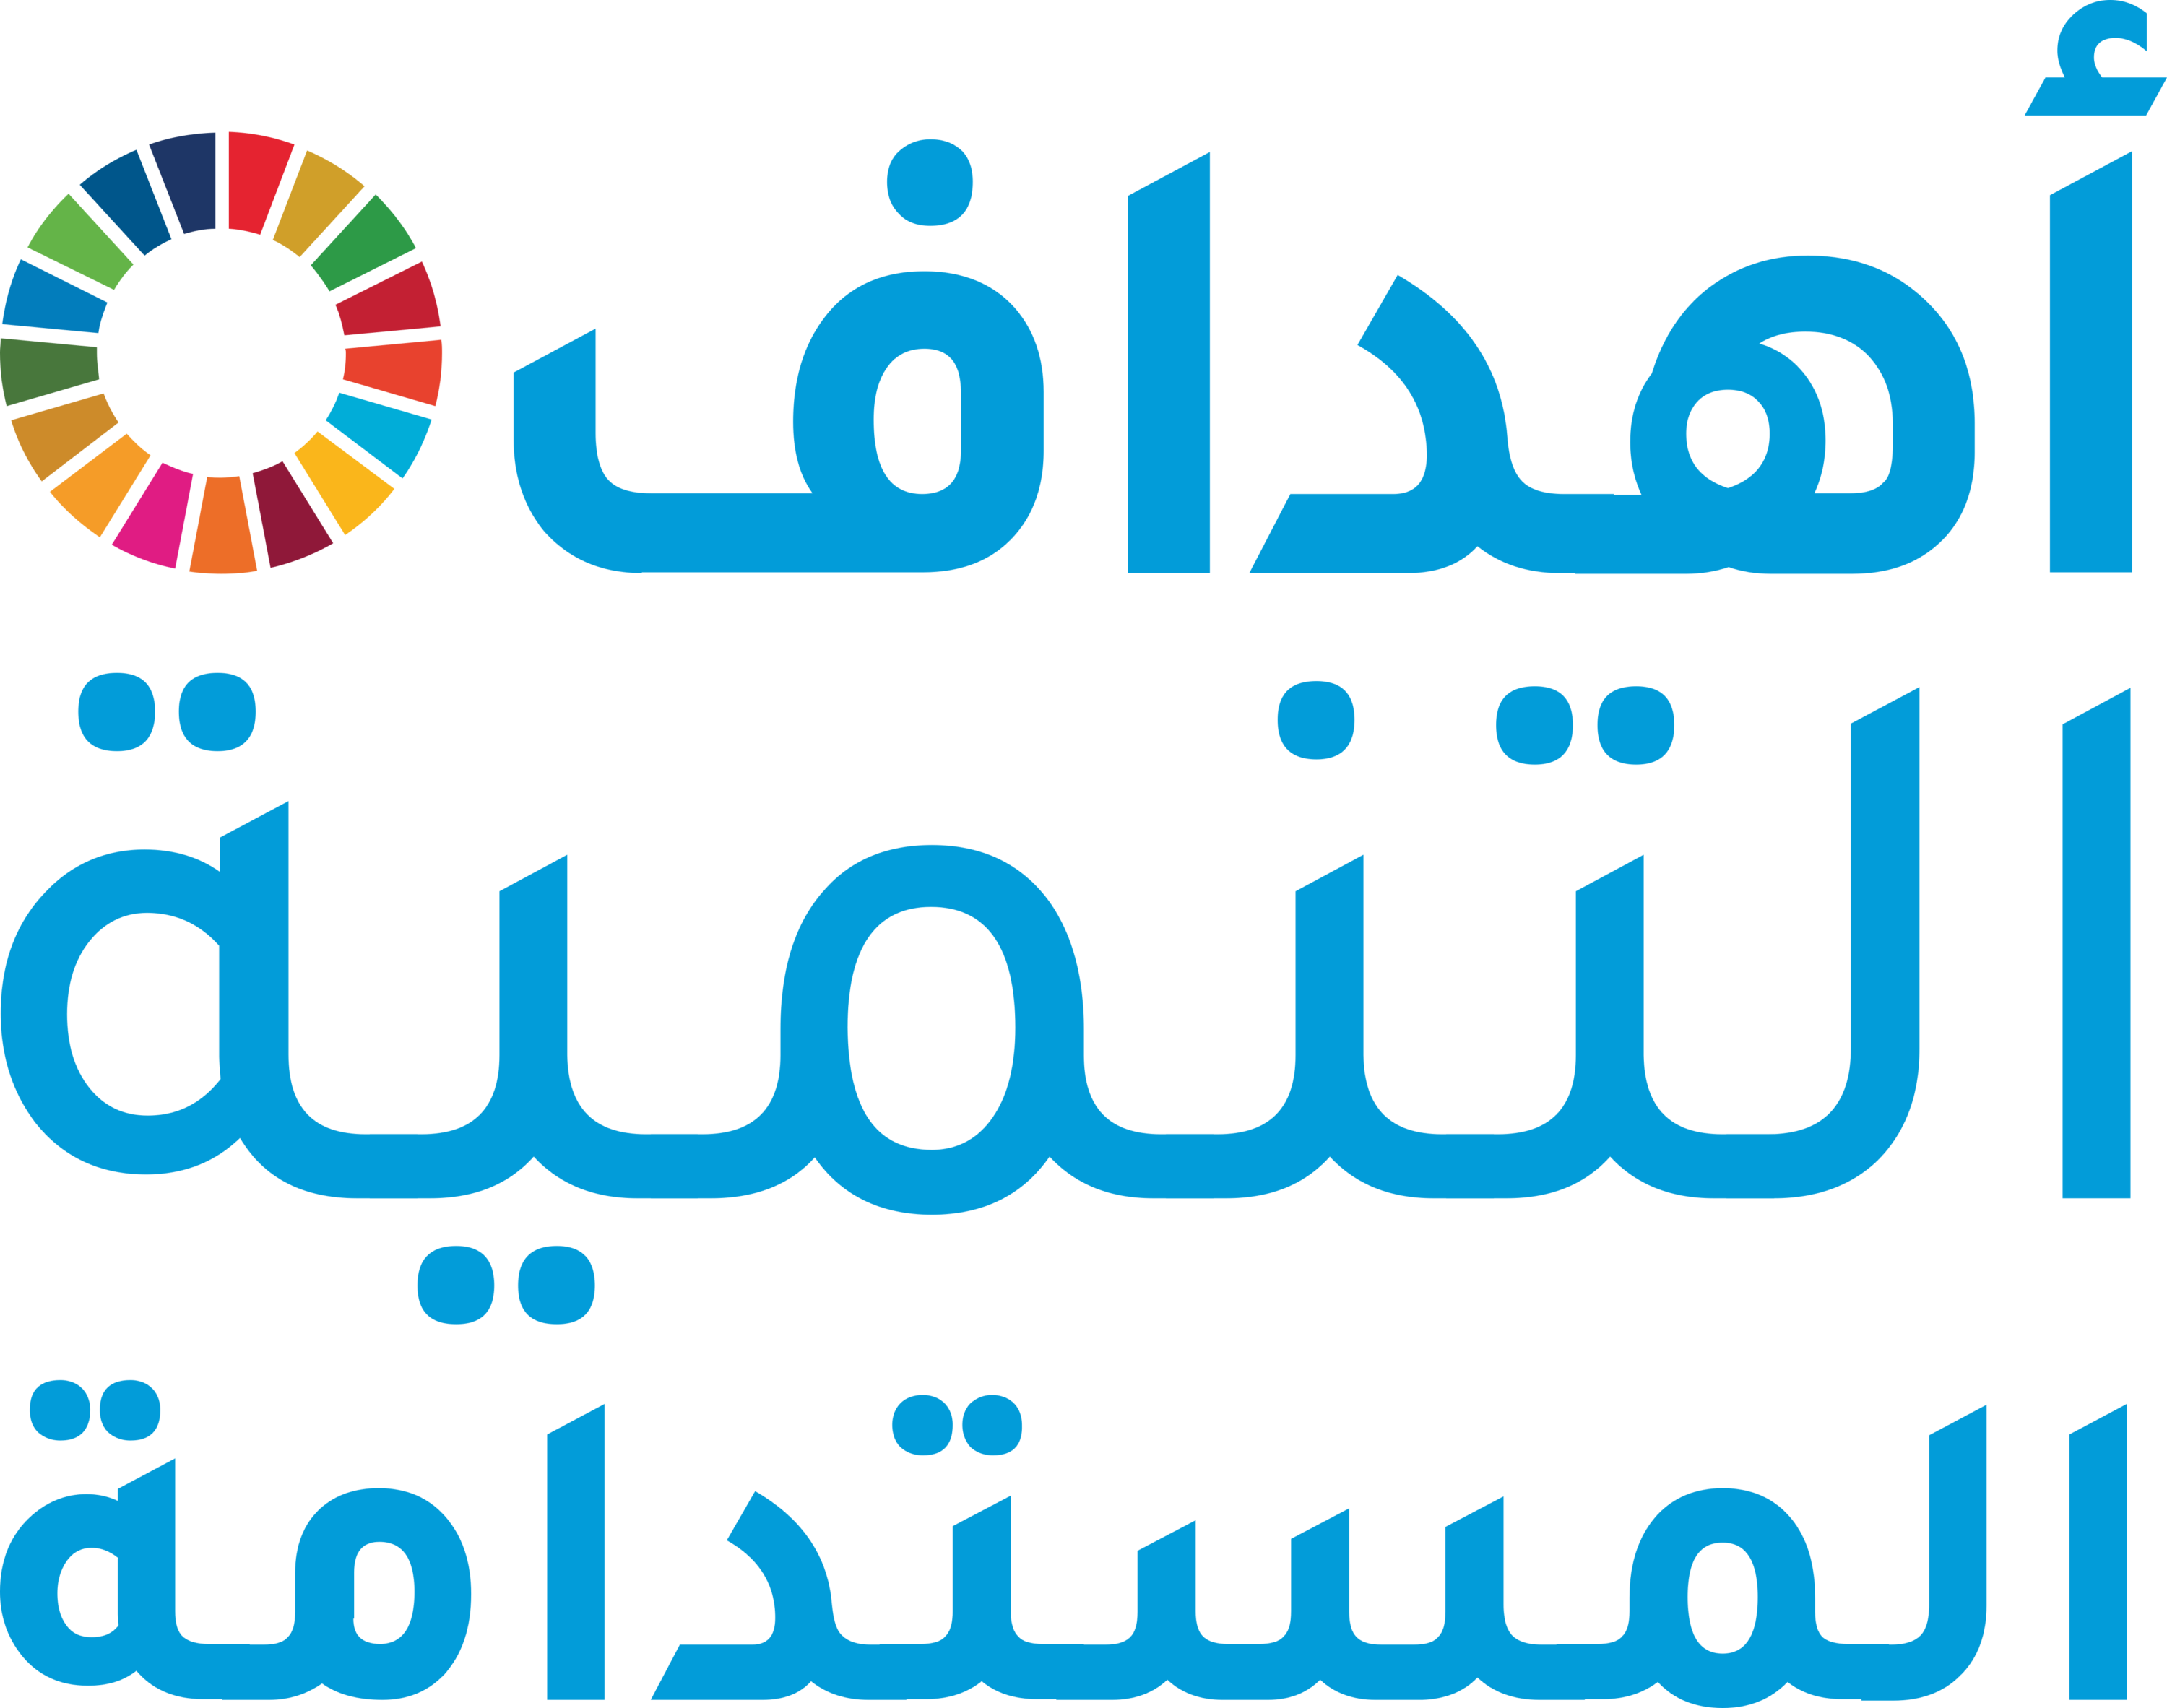 Sustainable Development Goals Arabic Logo